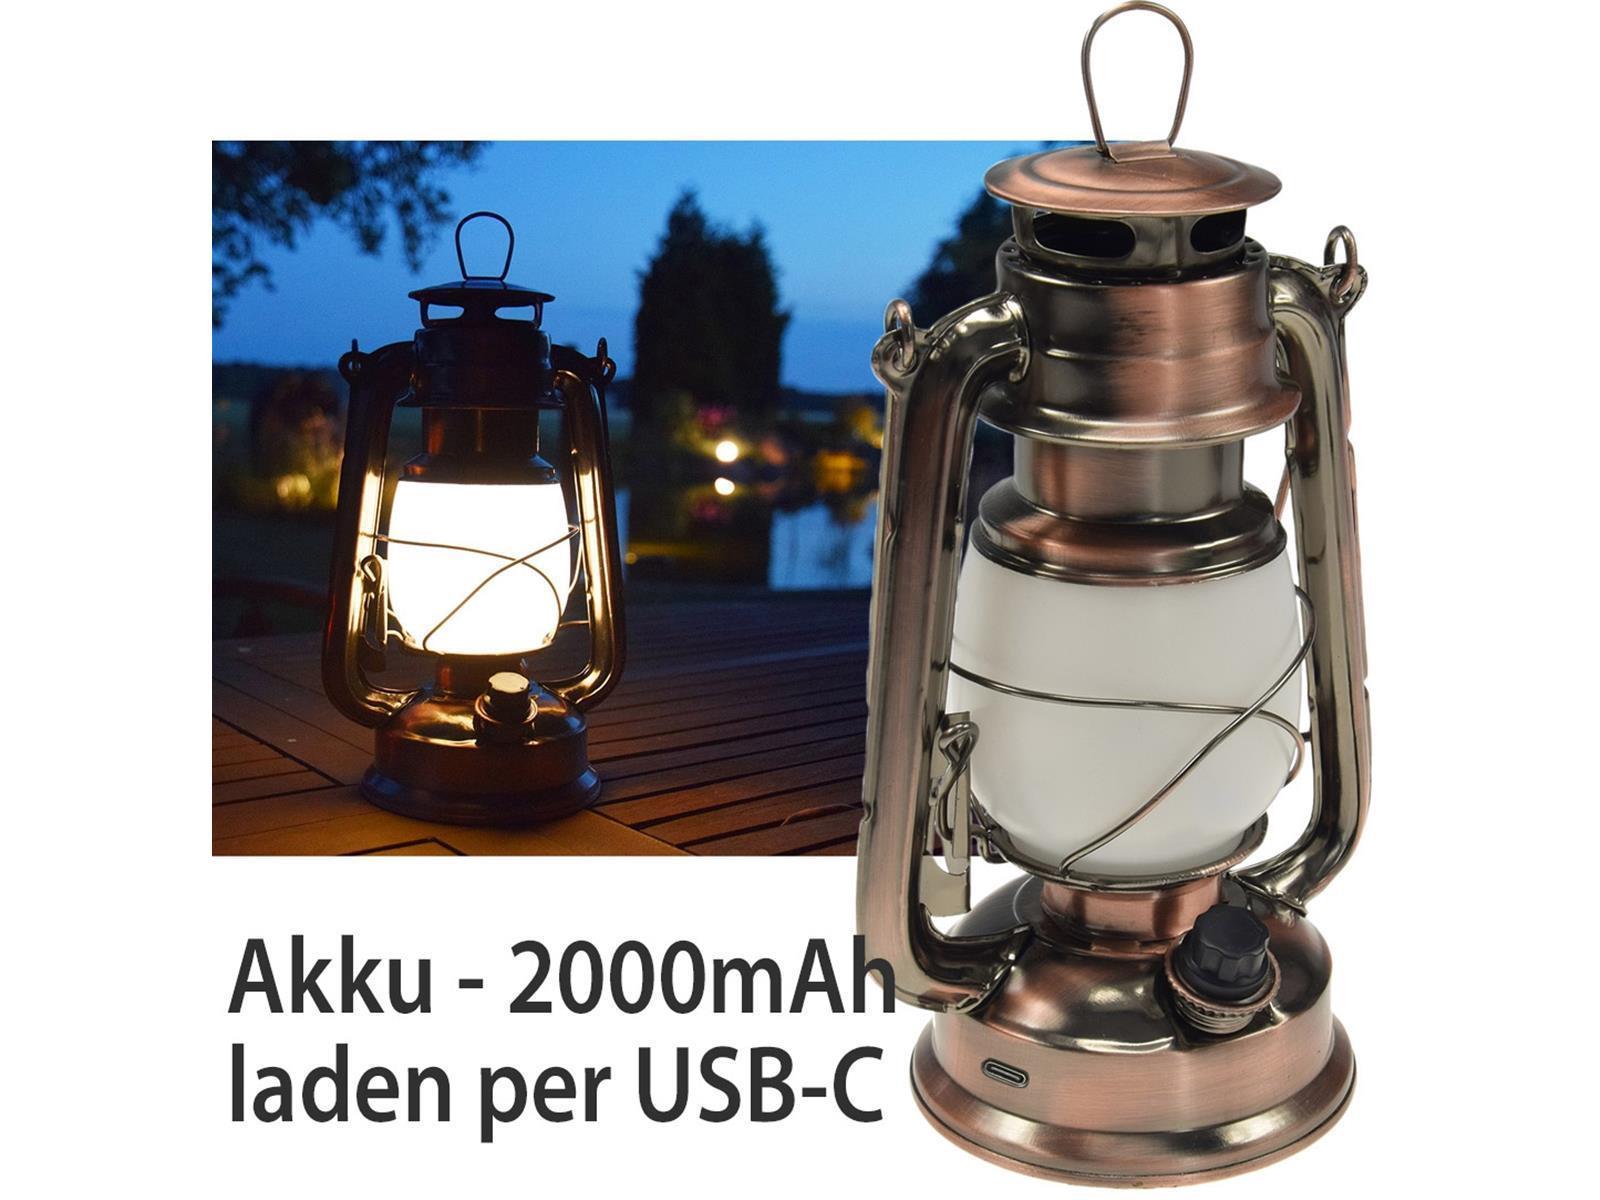 LED Akku Camping Laterne "CT-Copper Pro" ØxH 12x23,5cm, USB-C, warmweiß, dimmbar